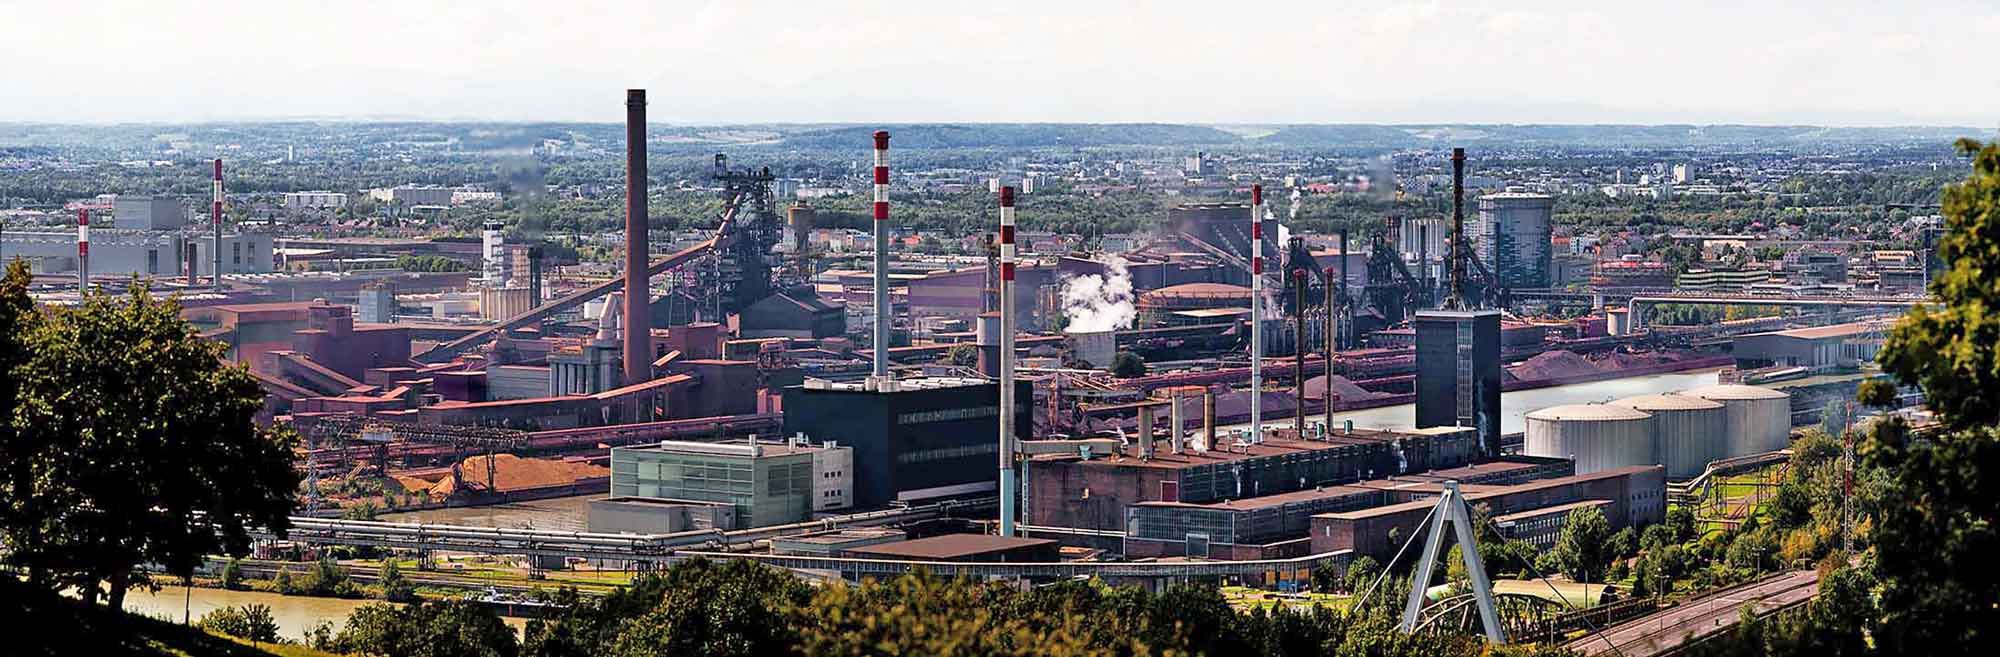 voestalpine steelworks in Linz, photo: Peter Pauer Photo Linz